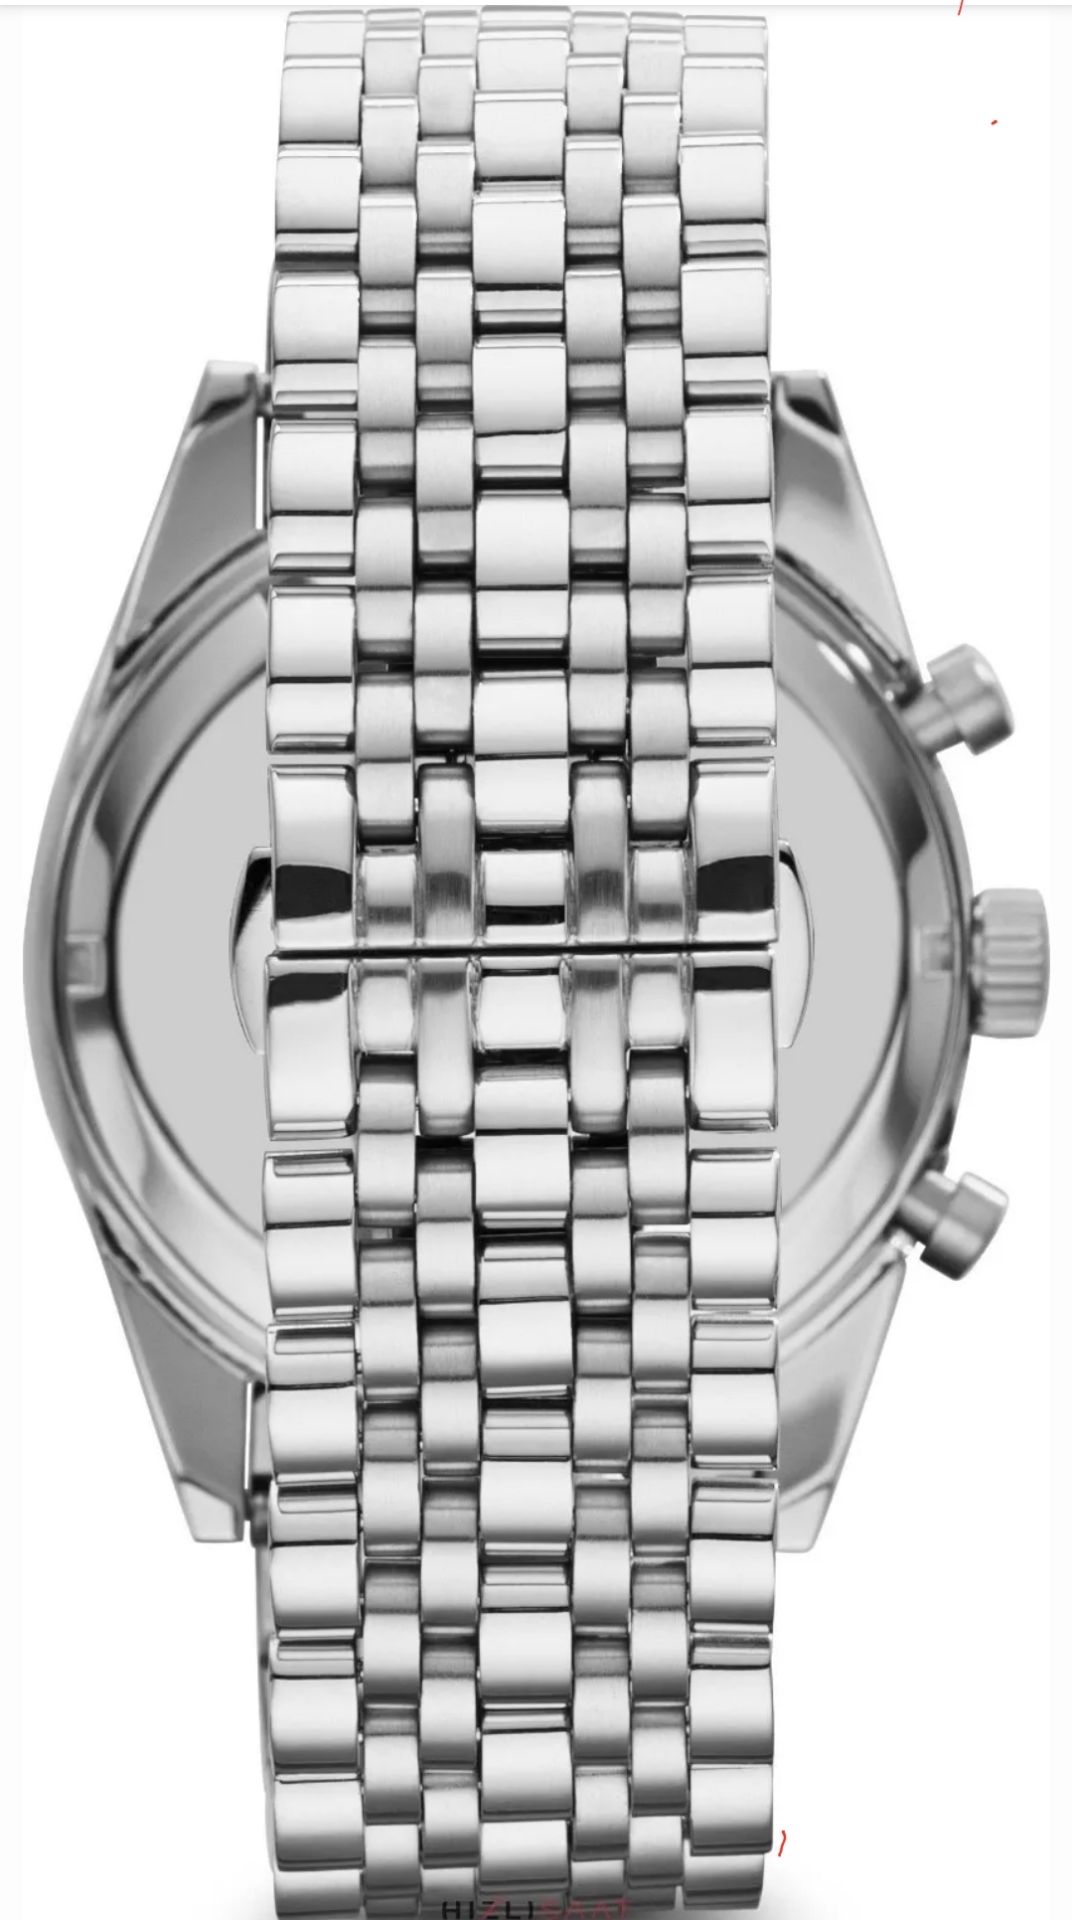 Emporio Armani AR5988 Men's Tazio Black Dial Silver Bracelet Chronograph Watch - Image 8 of 10